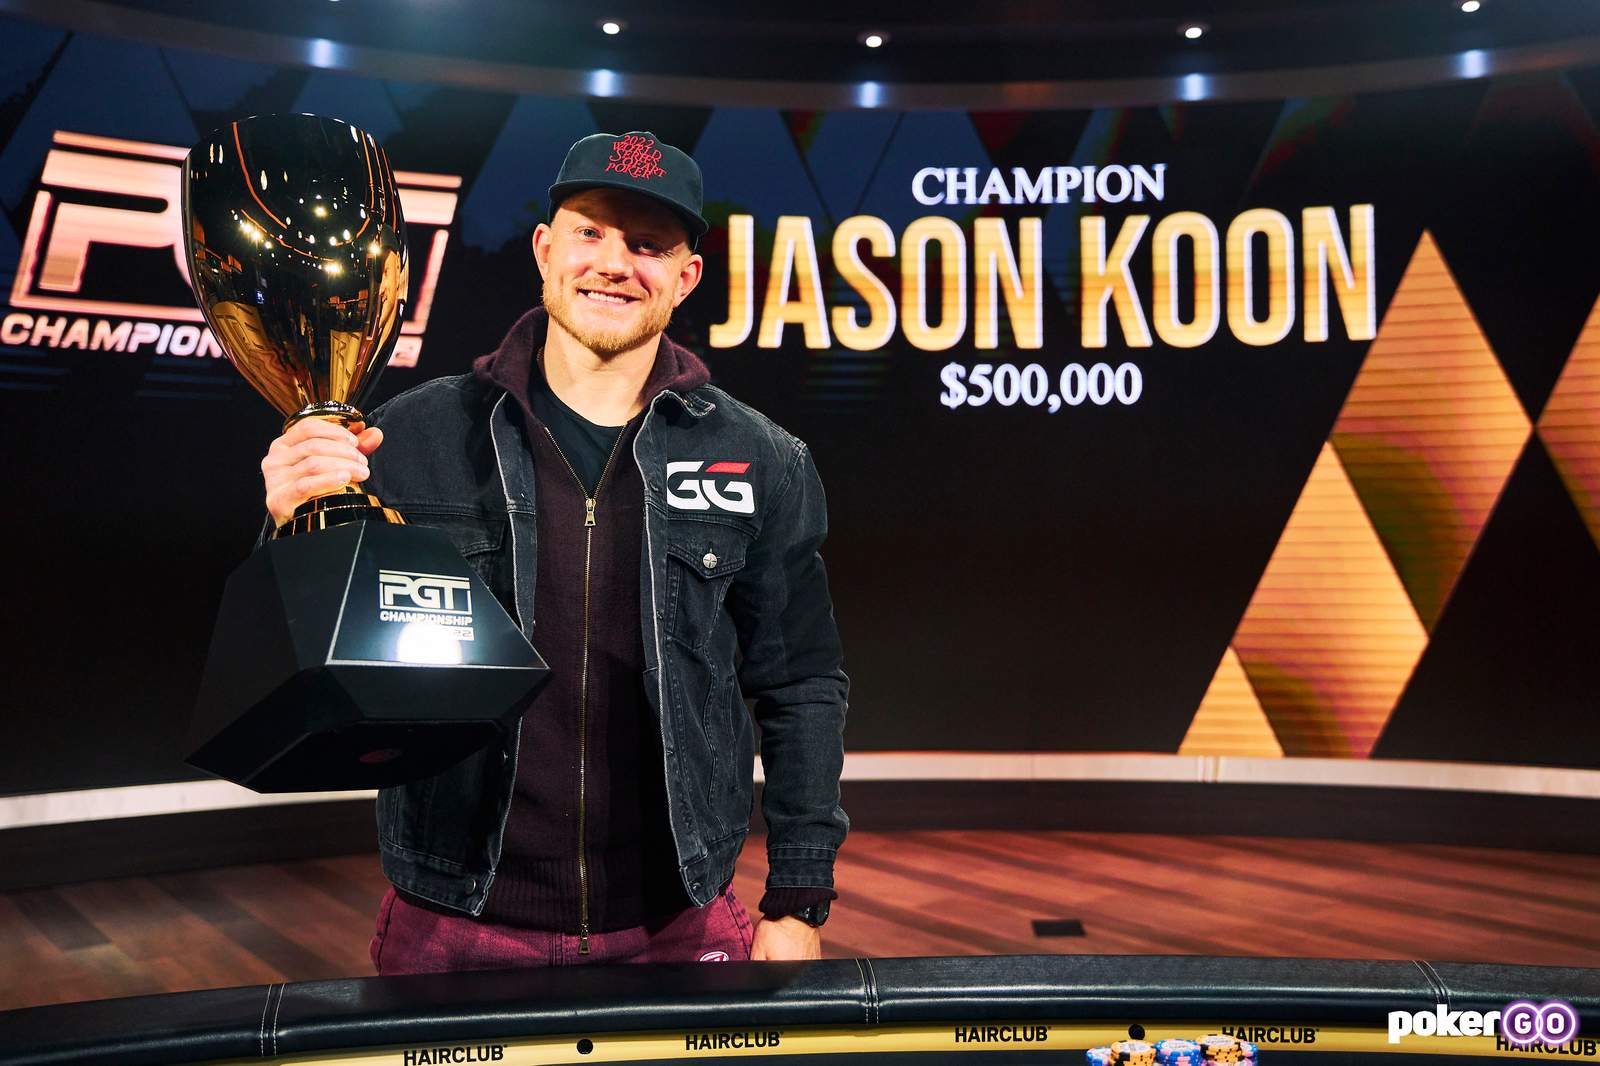 Jason Koon Wins PGT Championship for $500,000